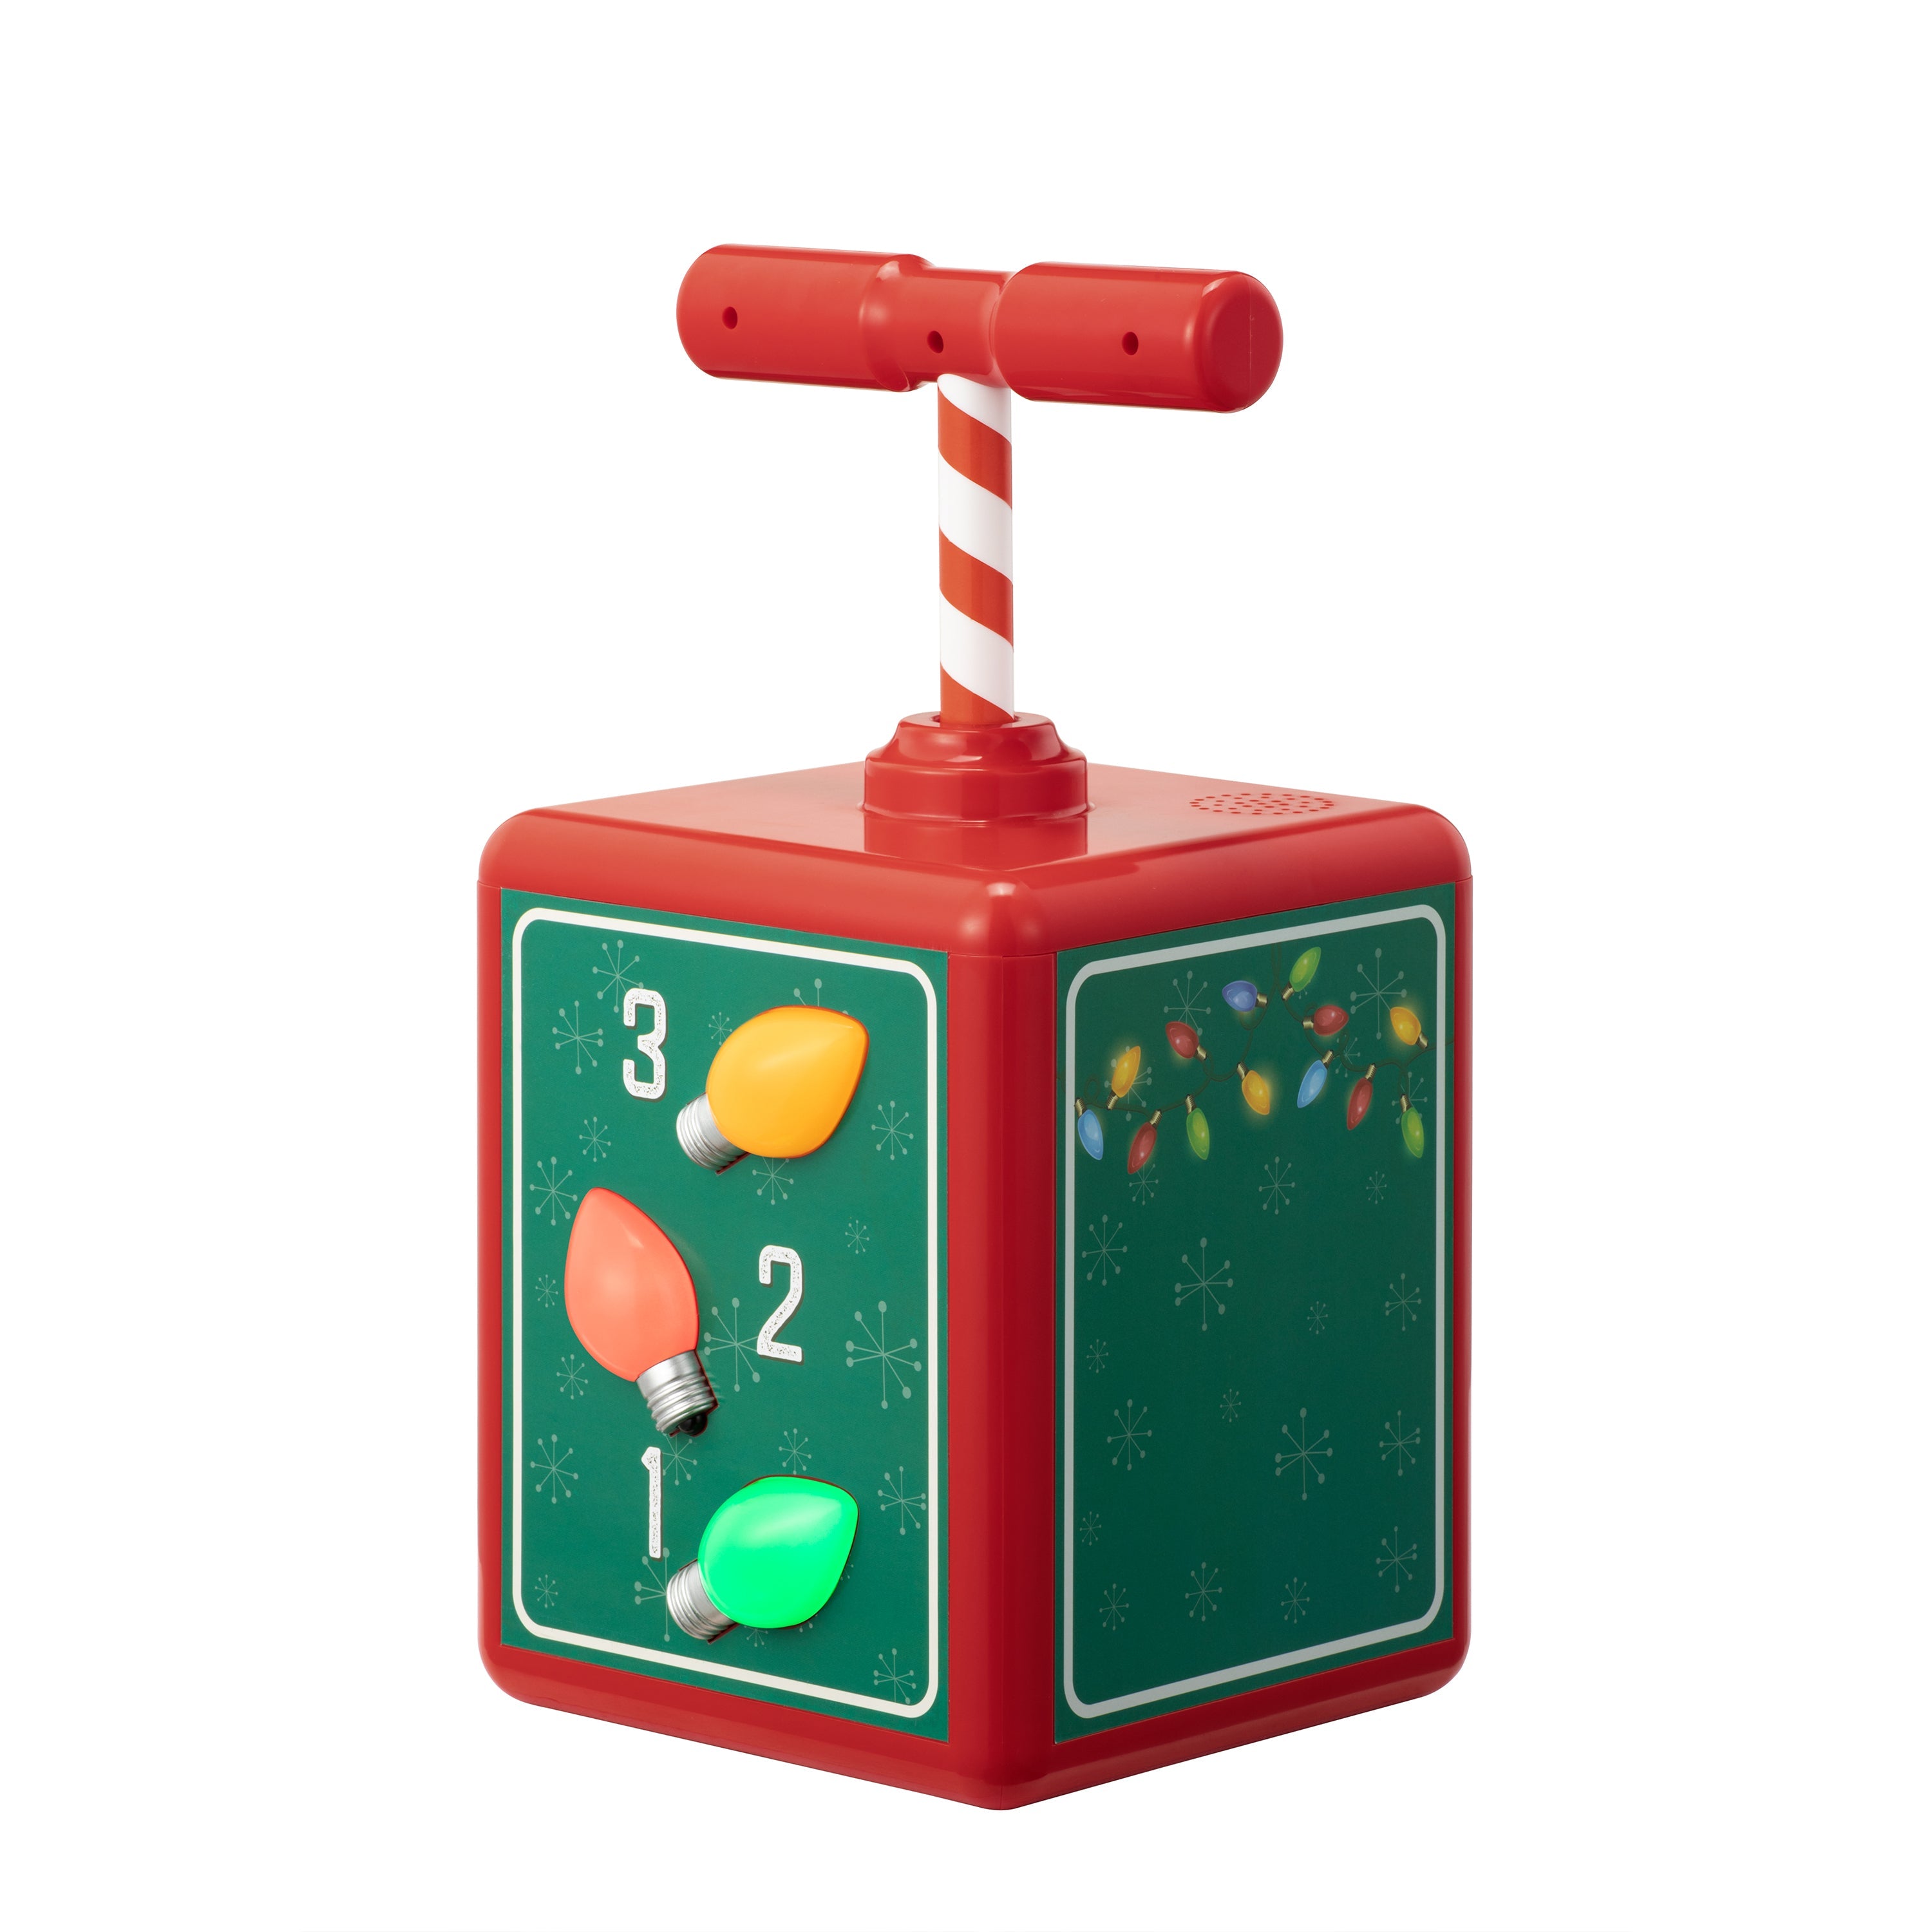 Magic Light Wand Christmas Tree Remote Control & Receiver System Light & Sound